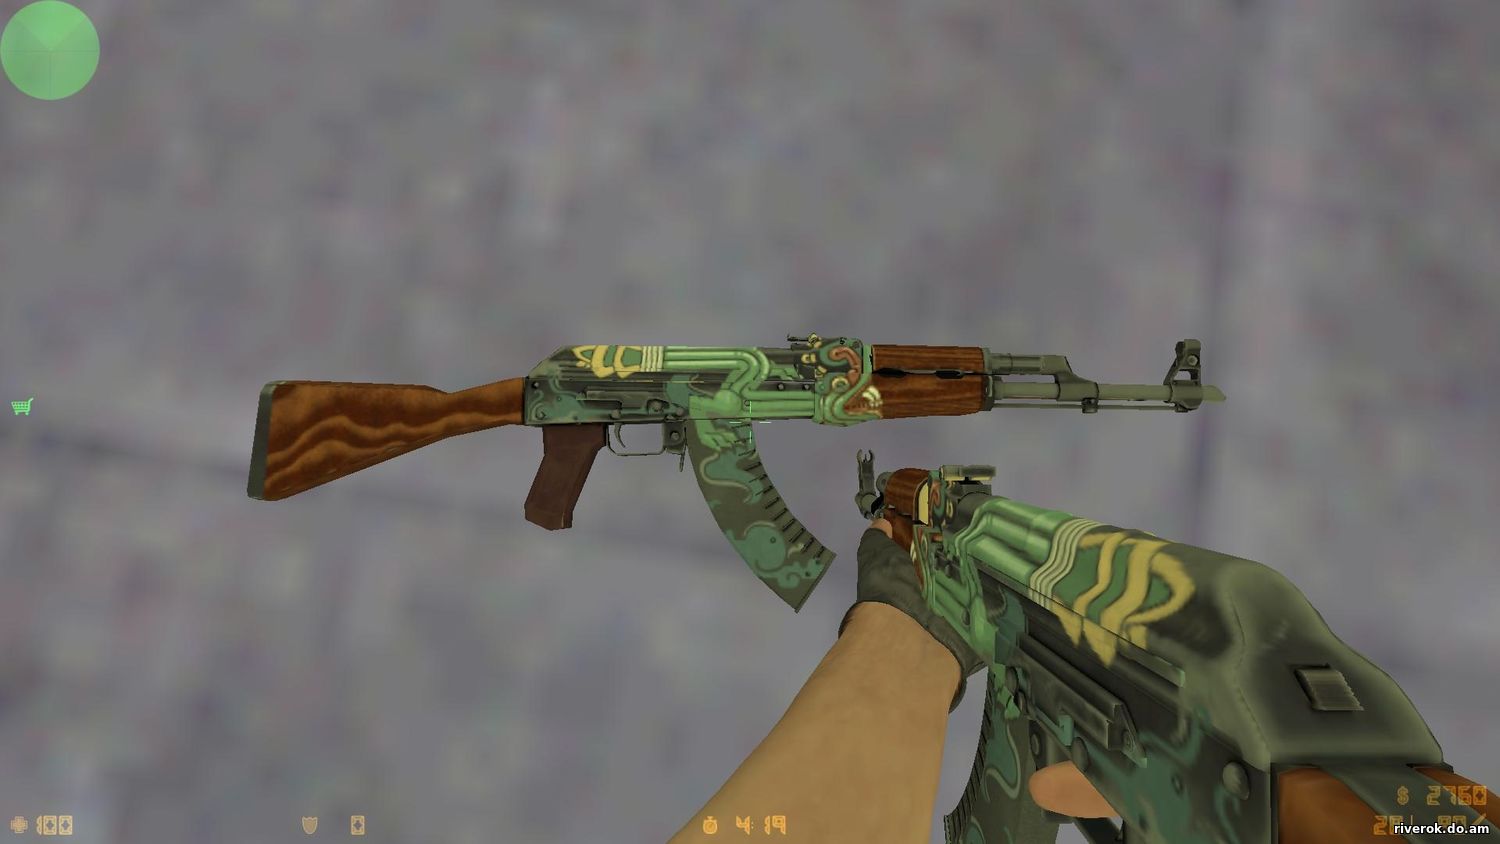 AK-47 "Огненная...